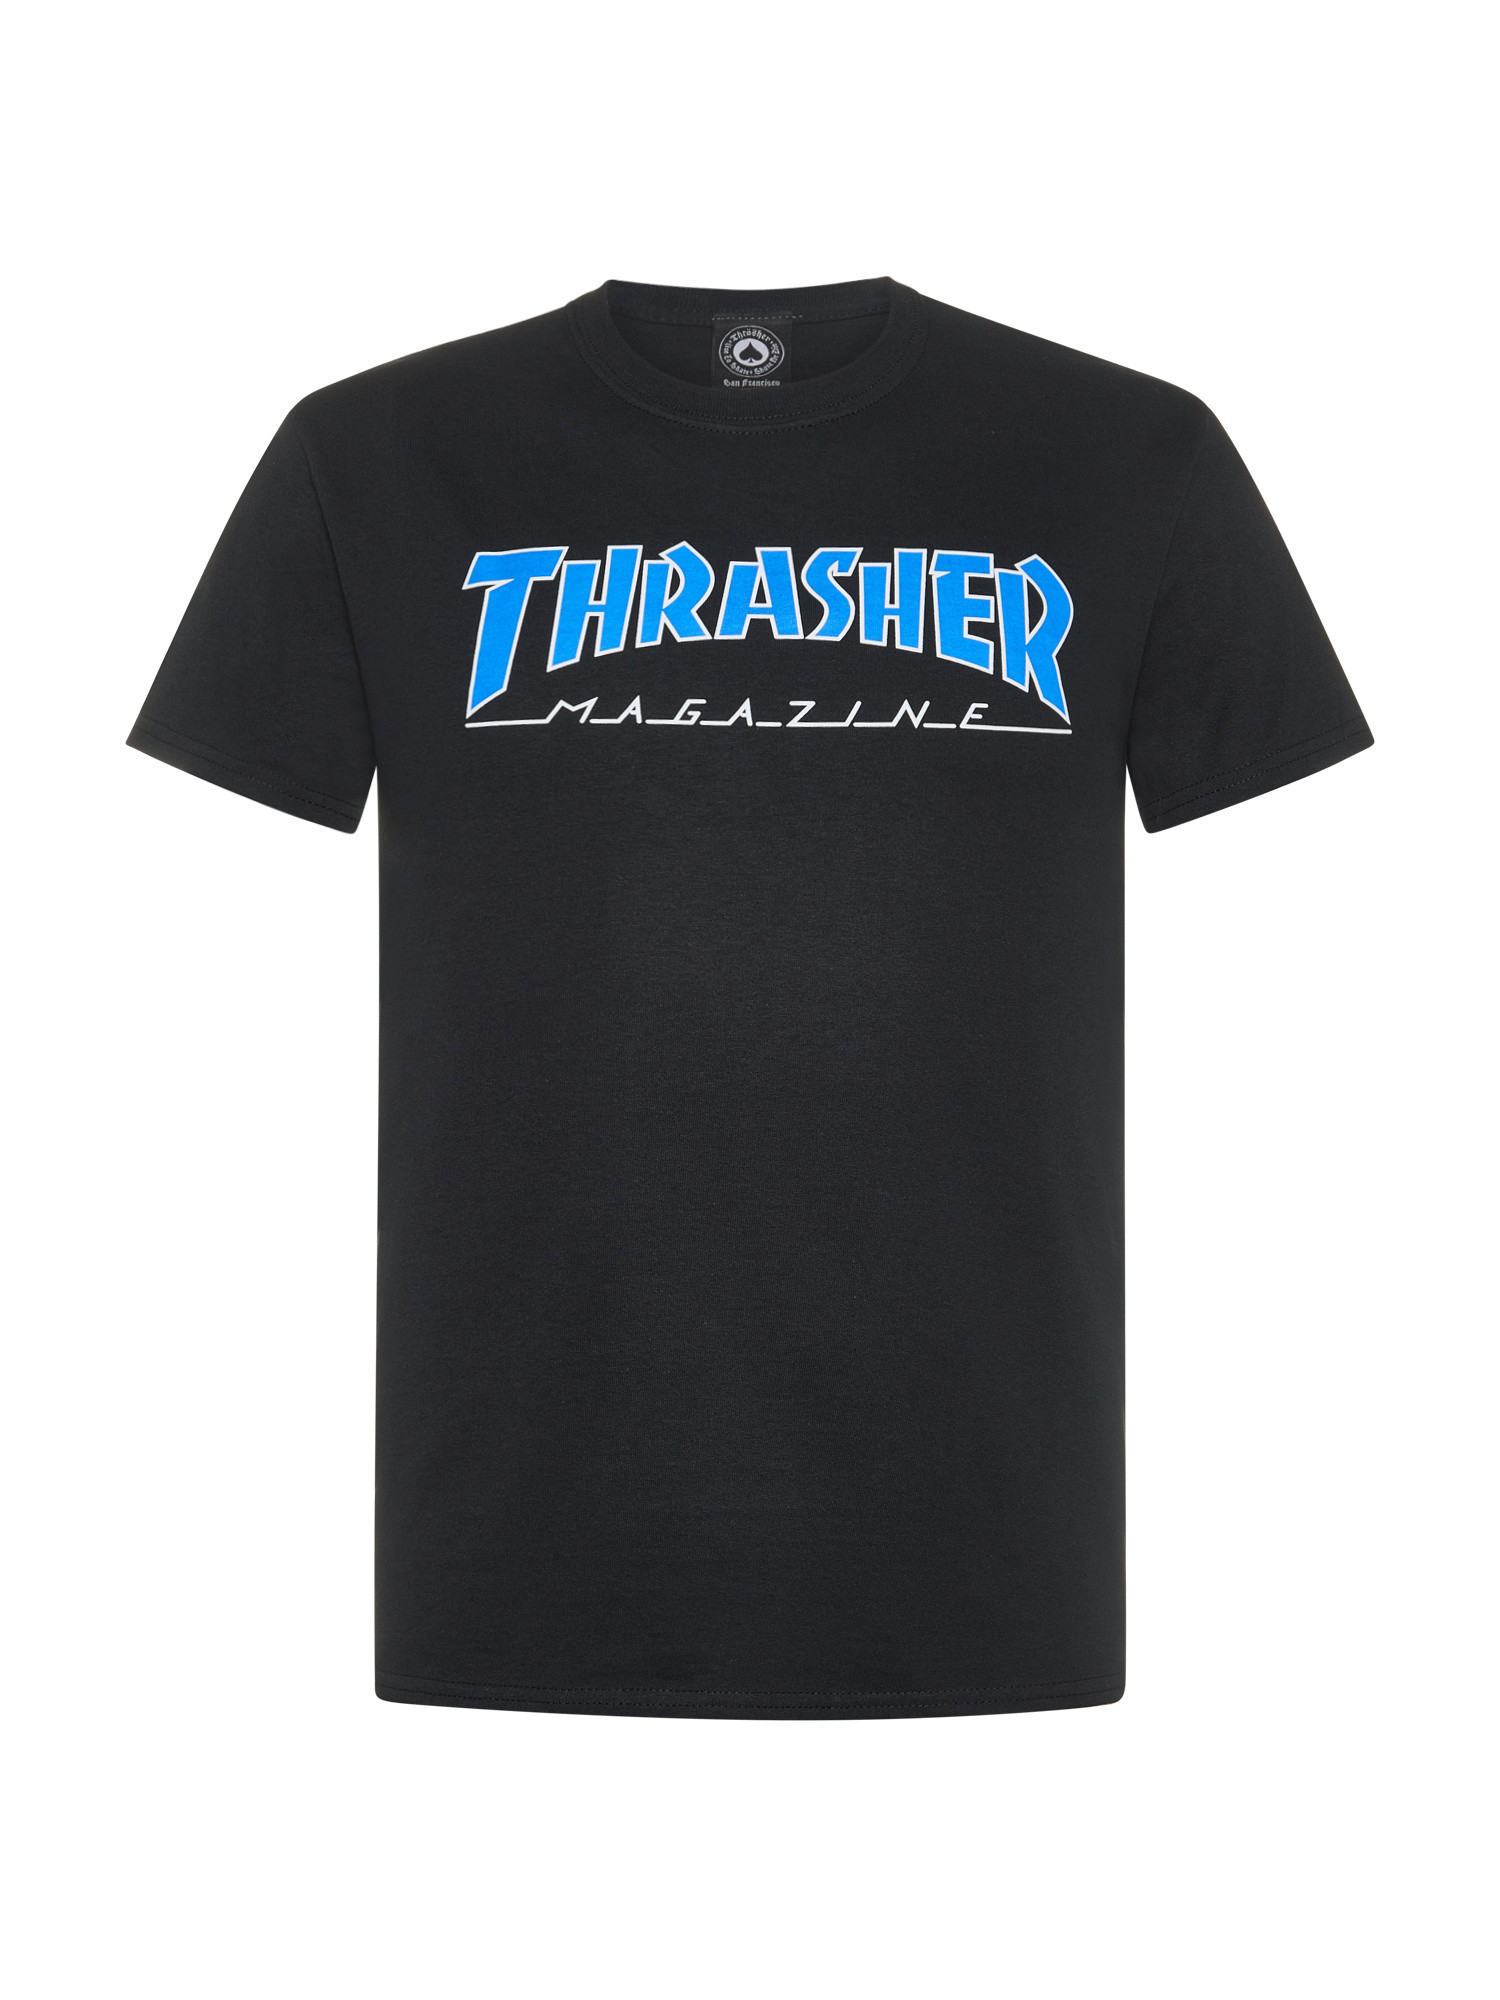 Thrasher - T-Shirt with outlined logo, Black, large image number 0